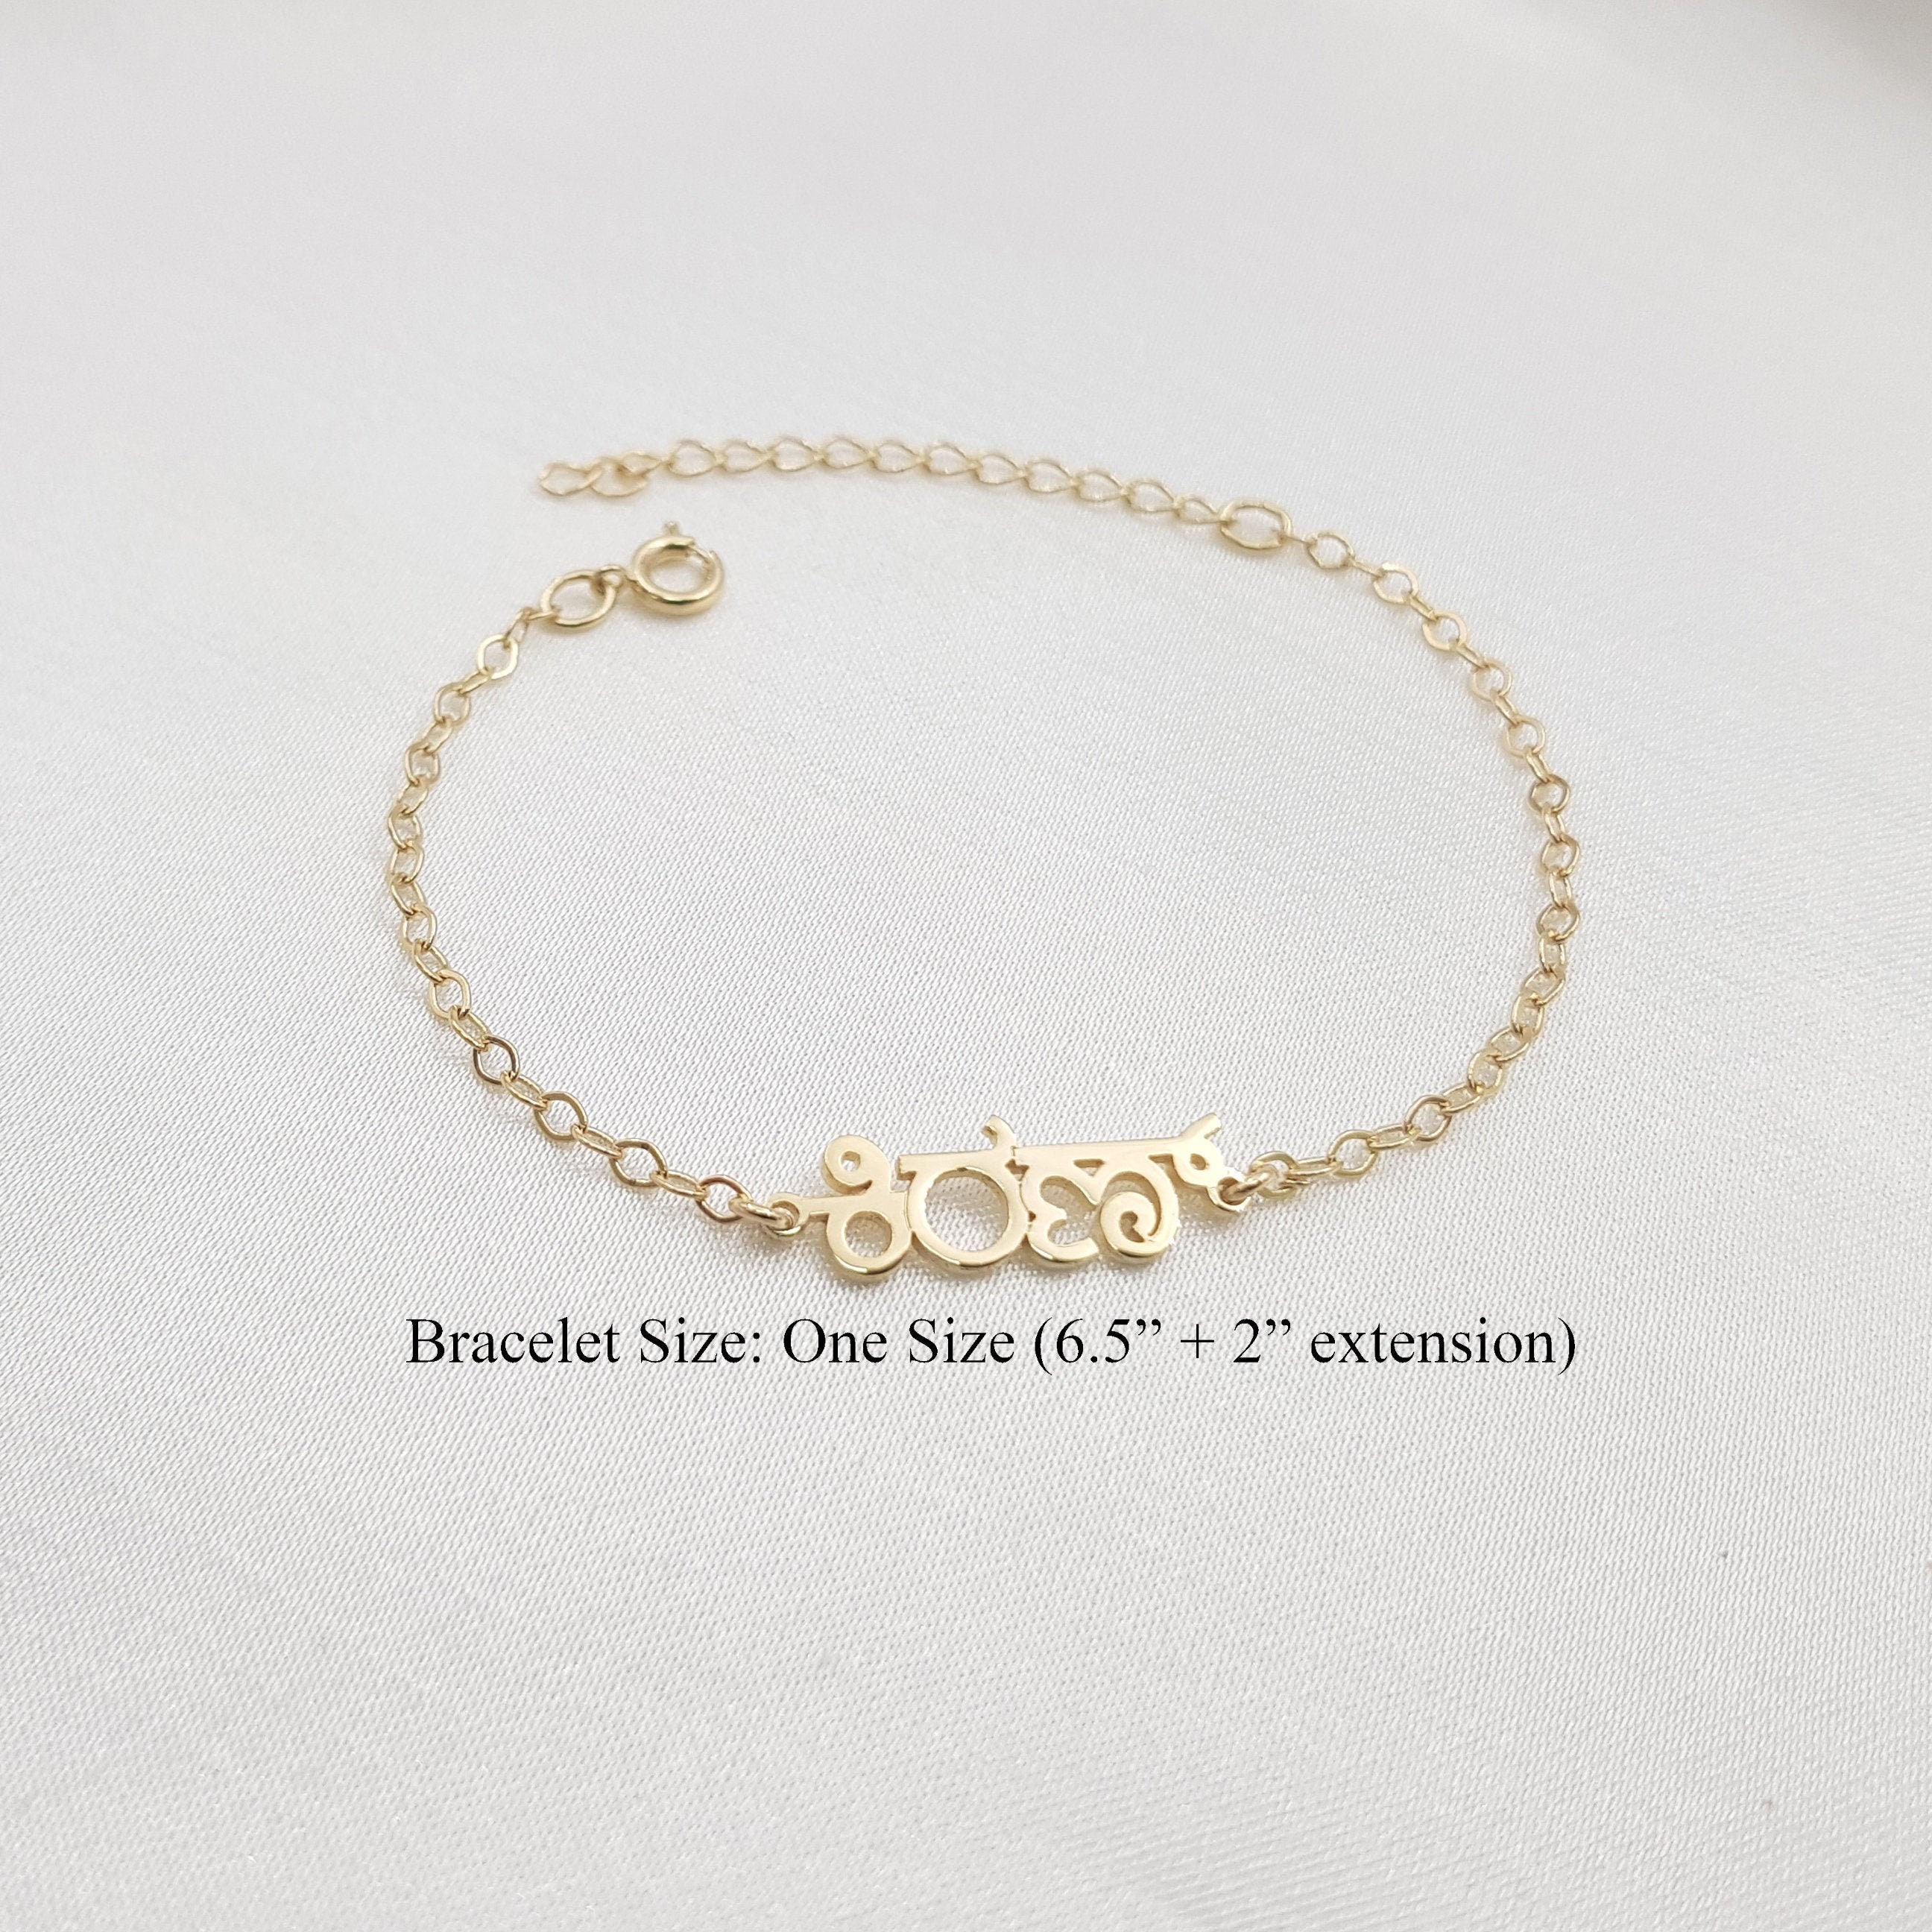 1 Gram Gold Forming Hollow Cute Design Best Quality Bracelet For Men -  Style B855 at Rs 1880.00 | गोल्ड प्लेटेड ब्रेसलेट - Soni Fashion, Rajkot |  ID: 2851894150891